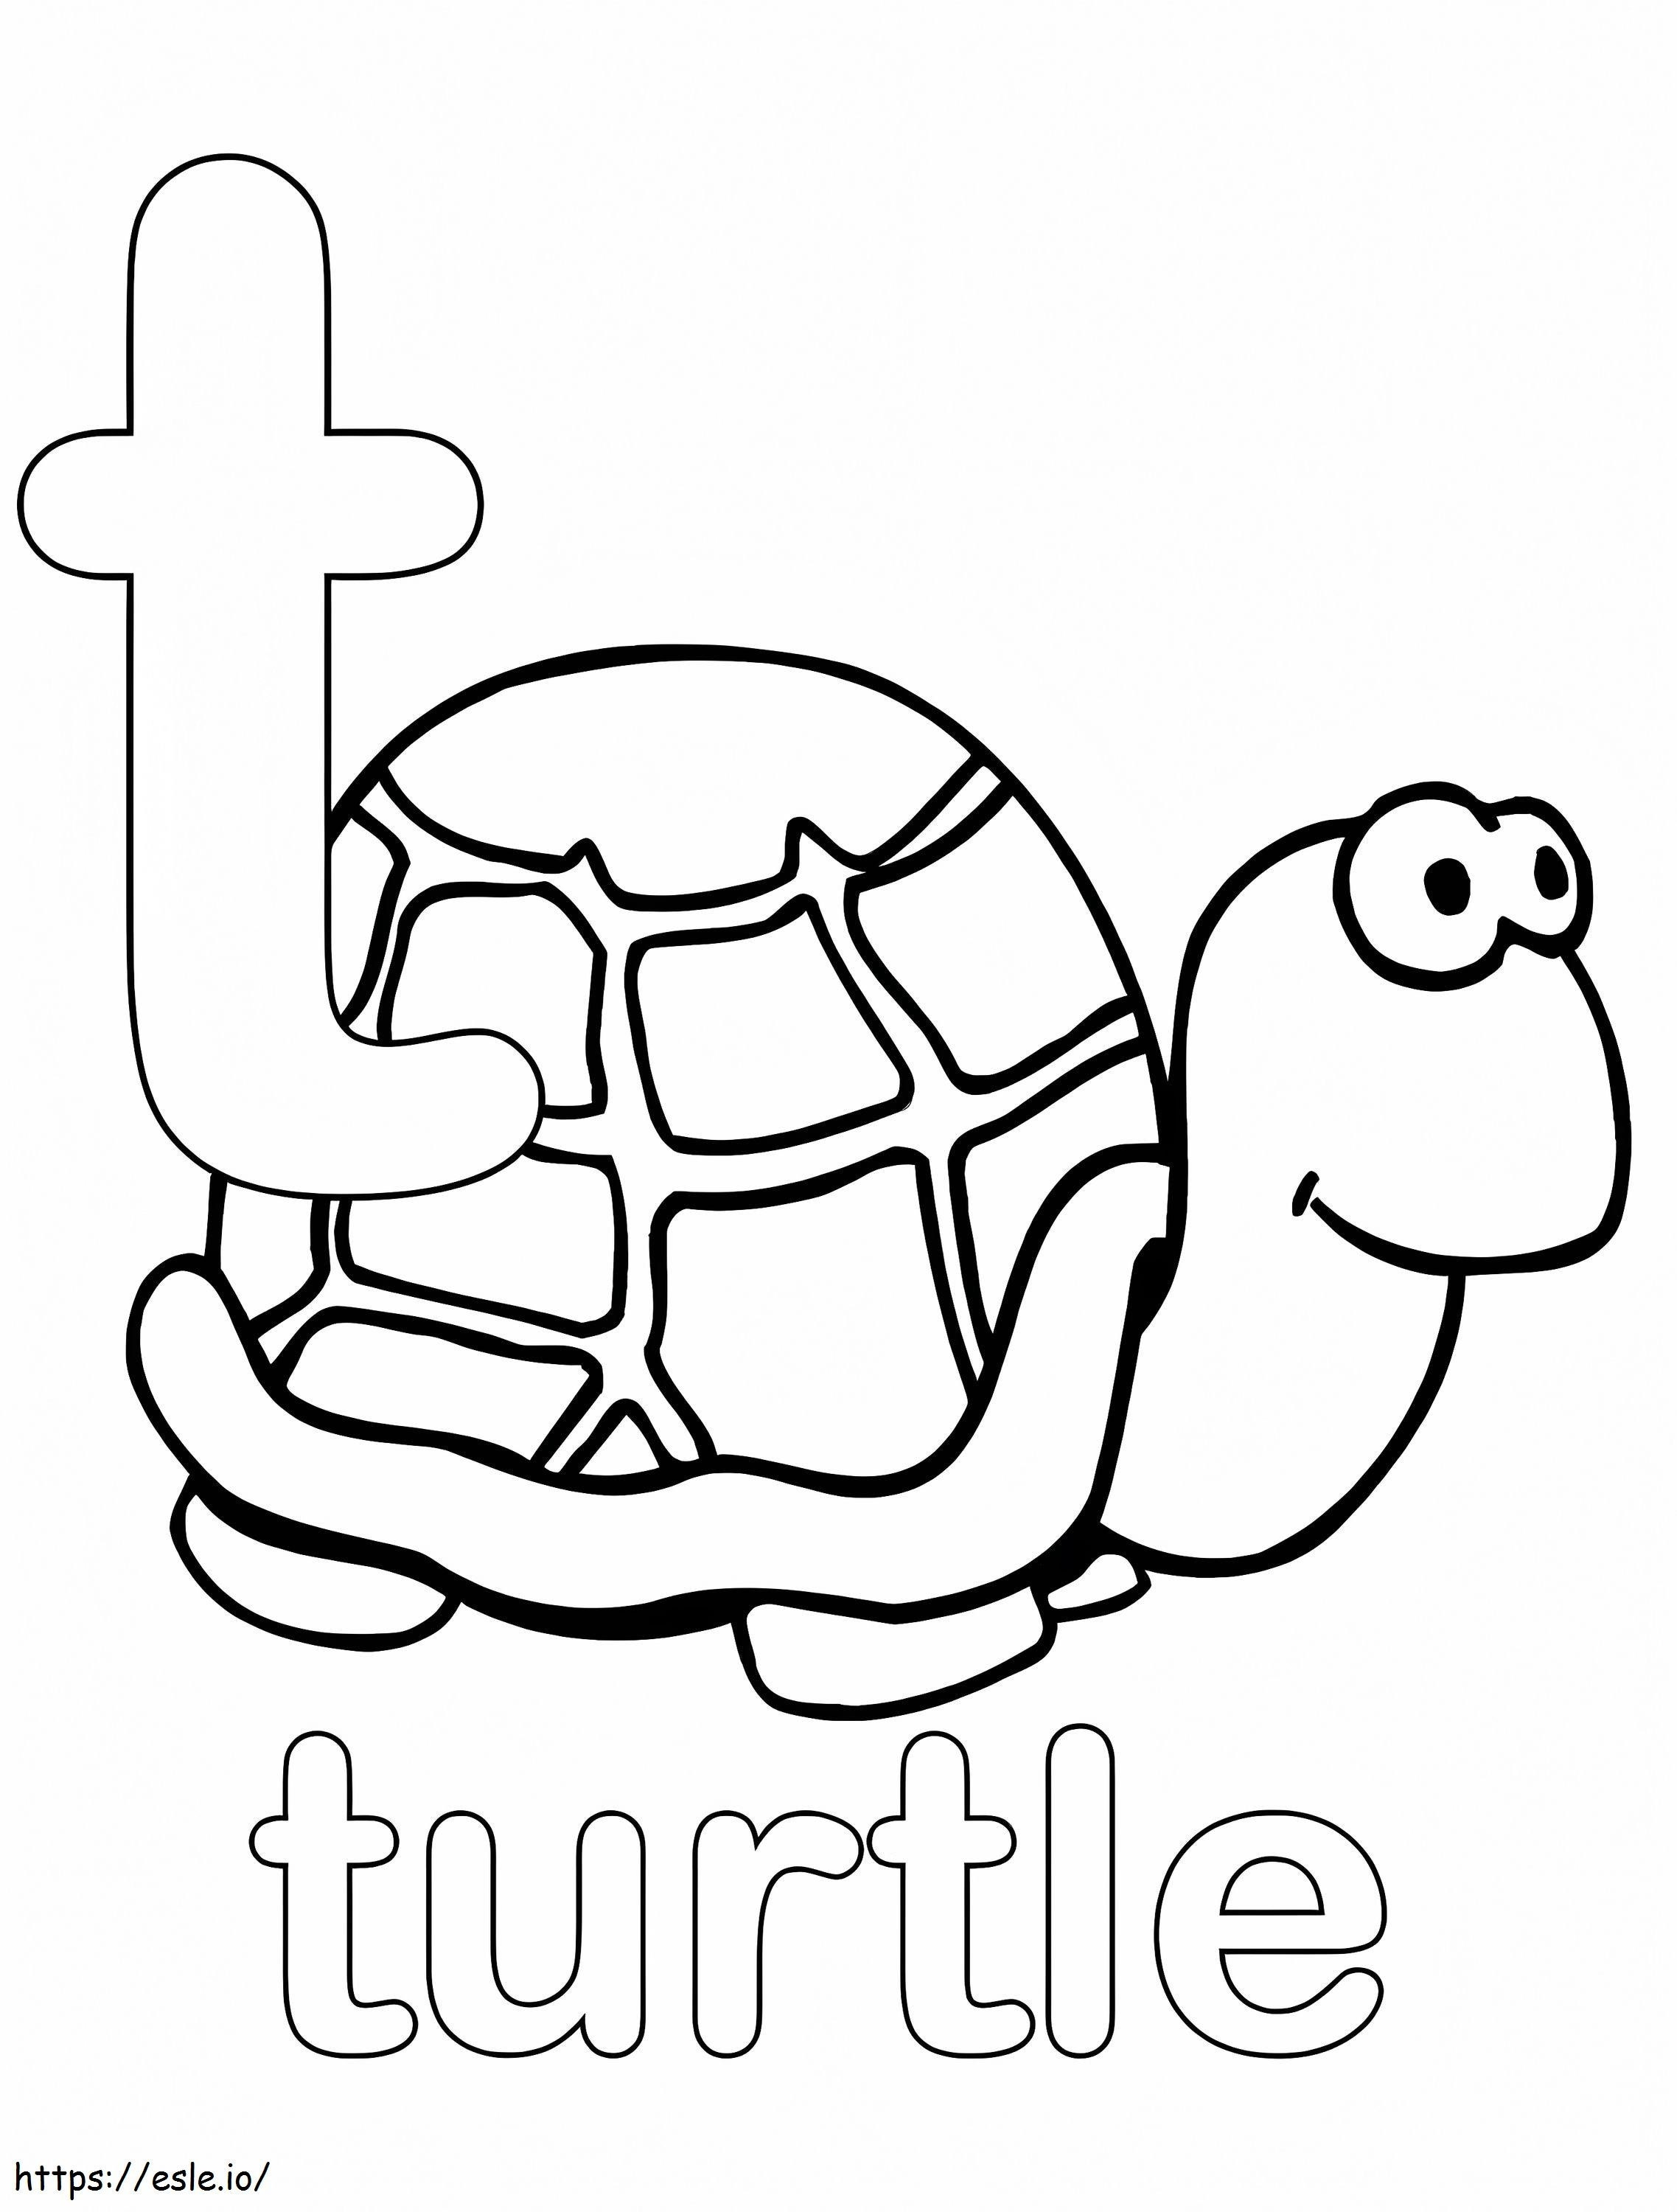 Tartaruga Bonita Letra T para colorir